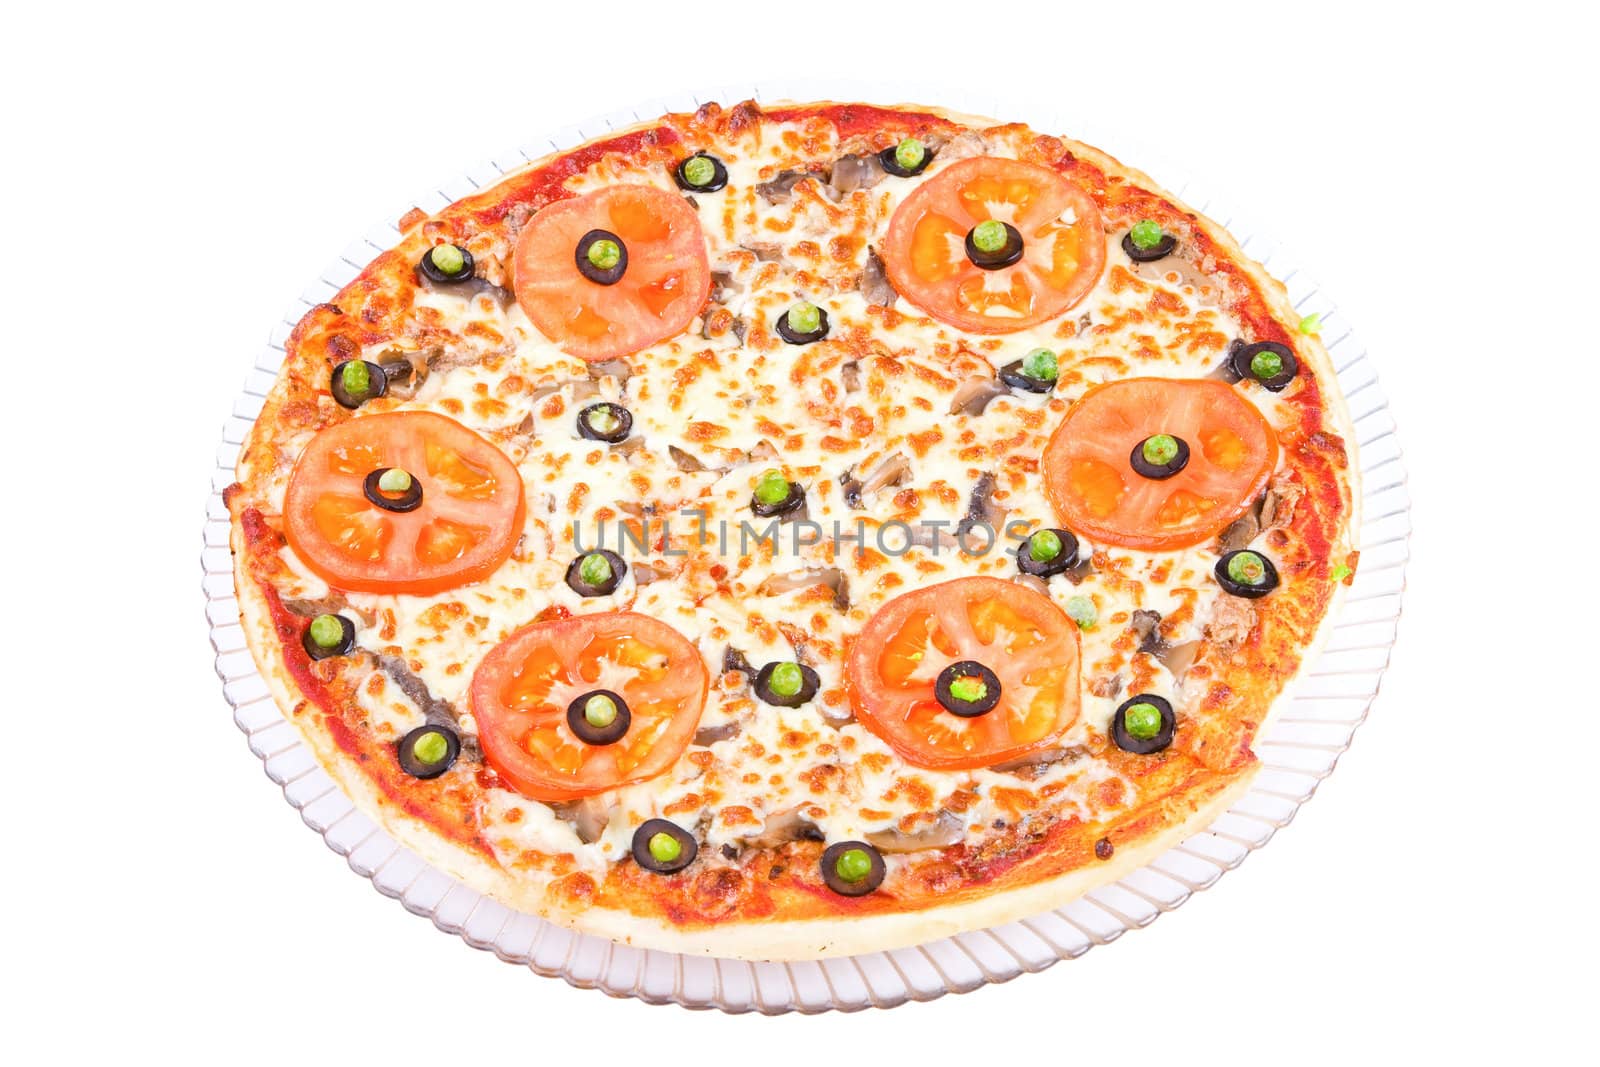 Pizza ala Siciliana  by vsurkov